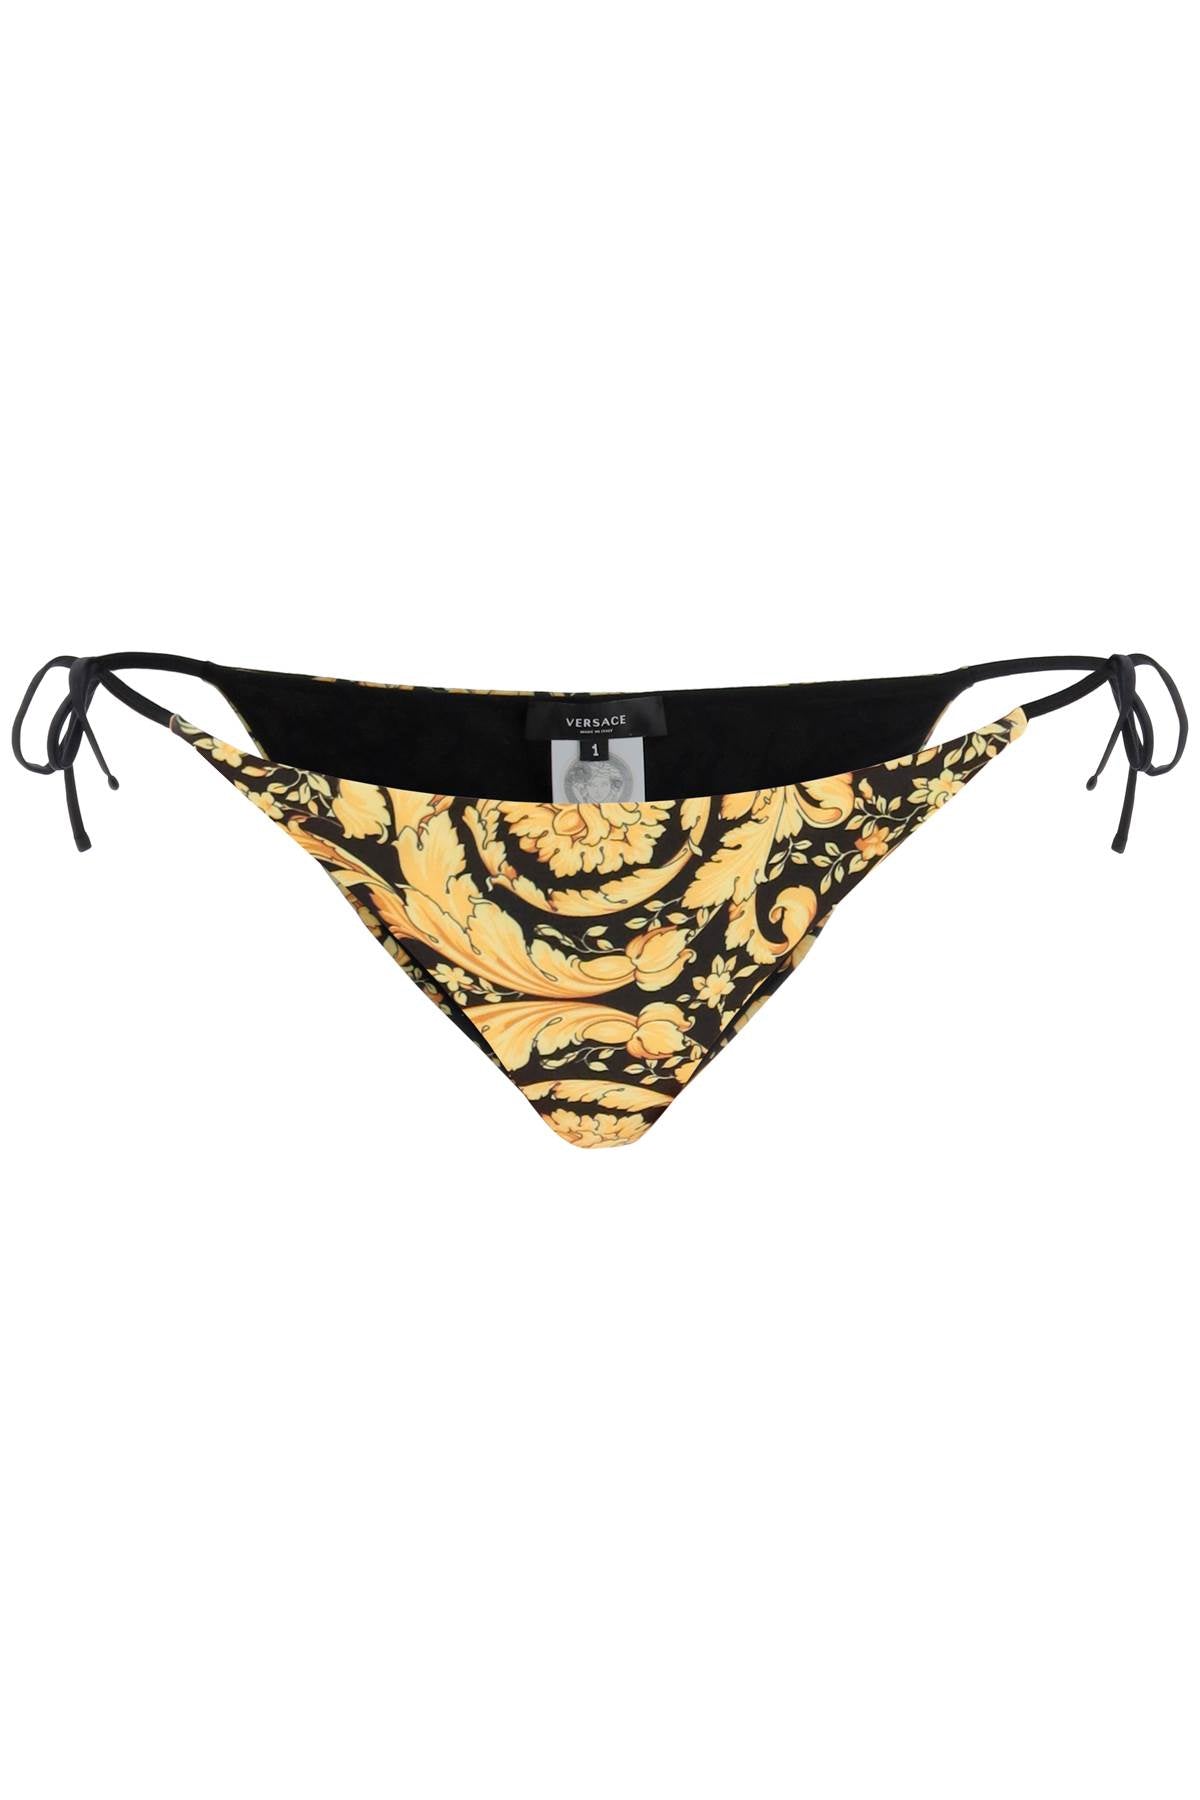 Versace barocco bikini bottom-0